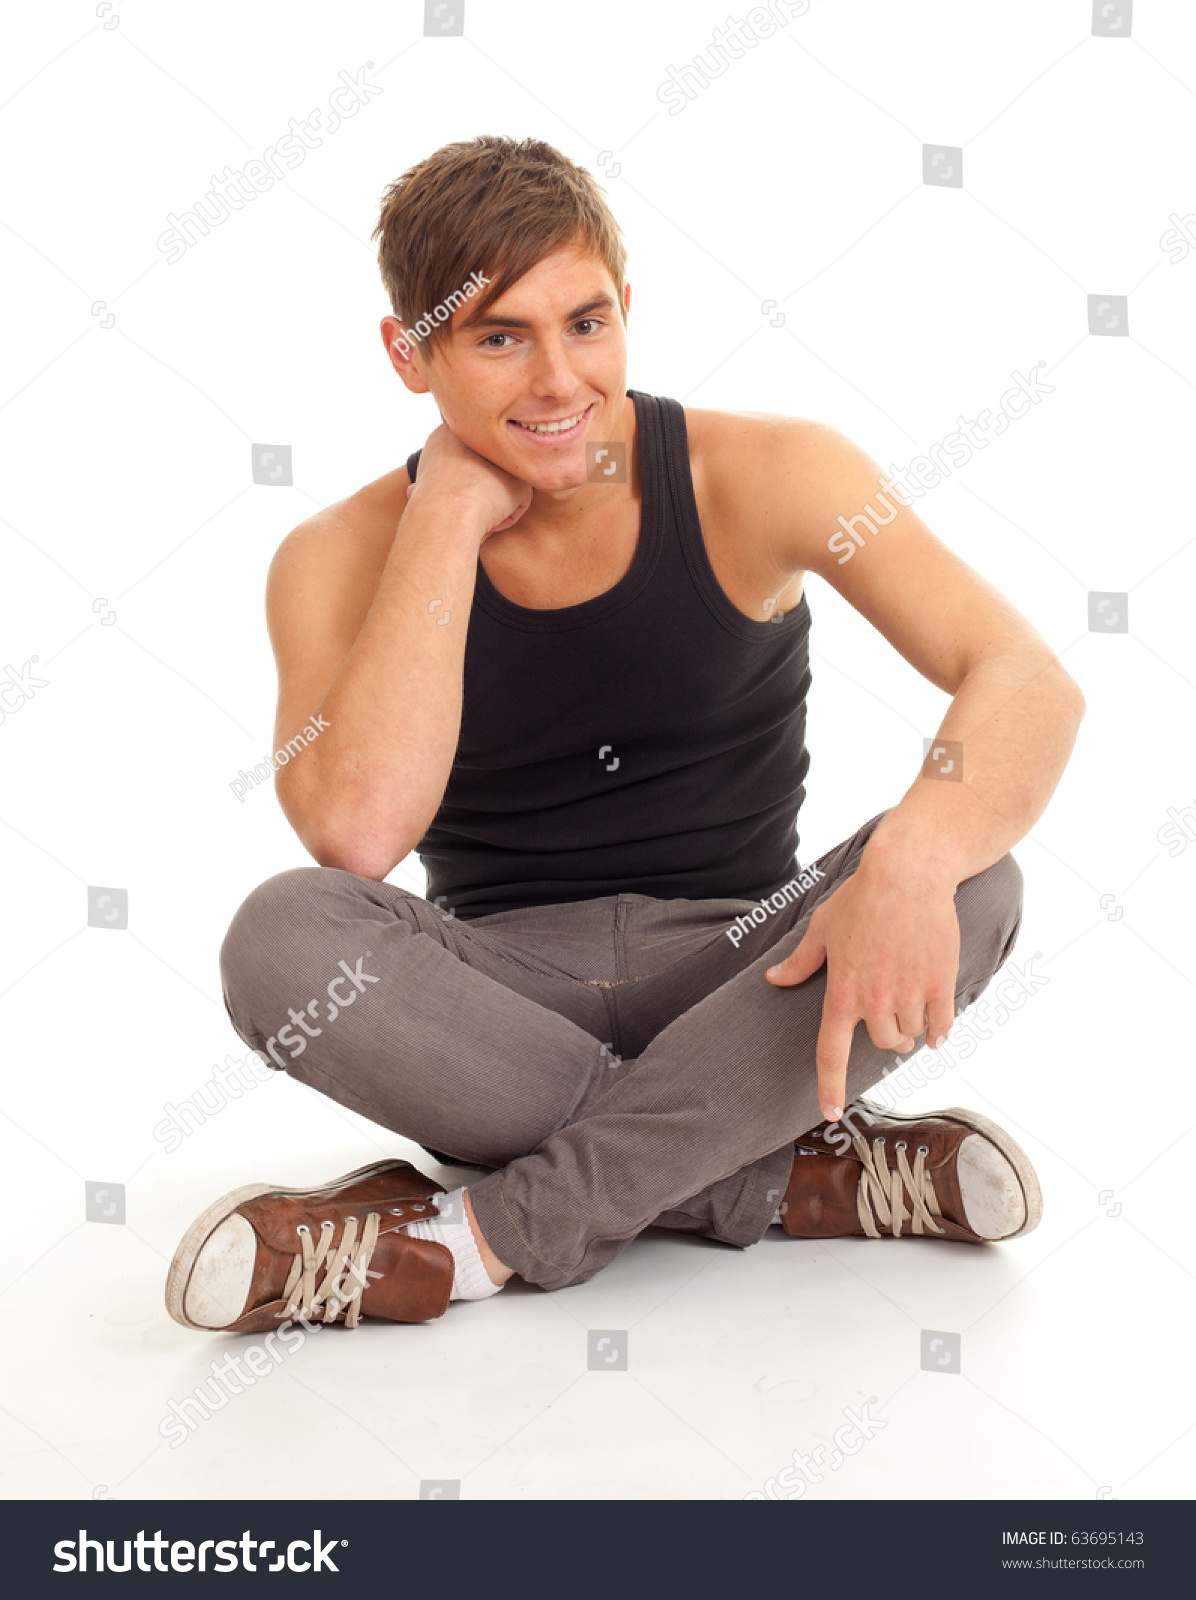 Мужчина сидит на полу скрестив ноги